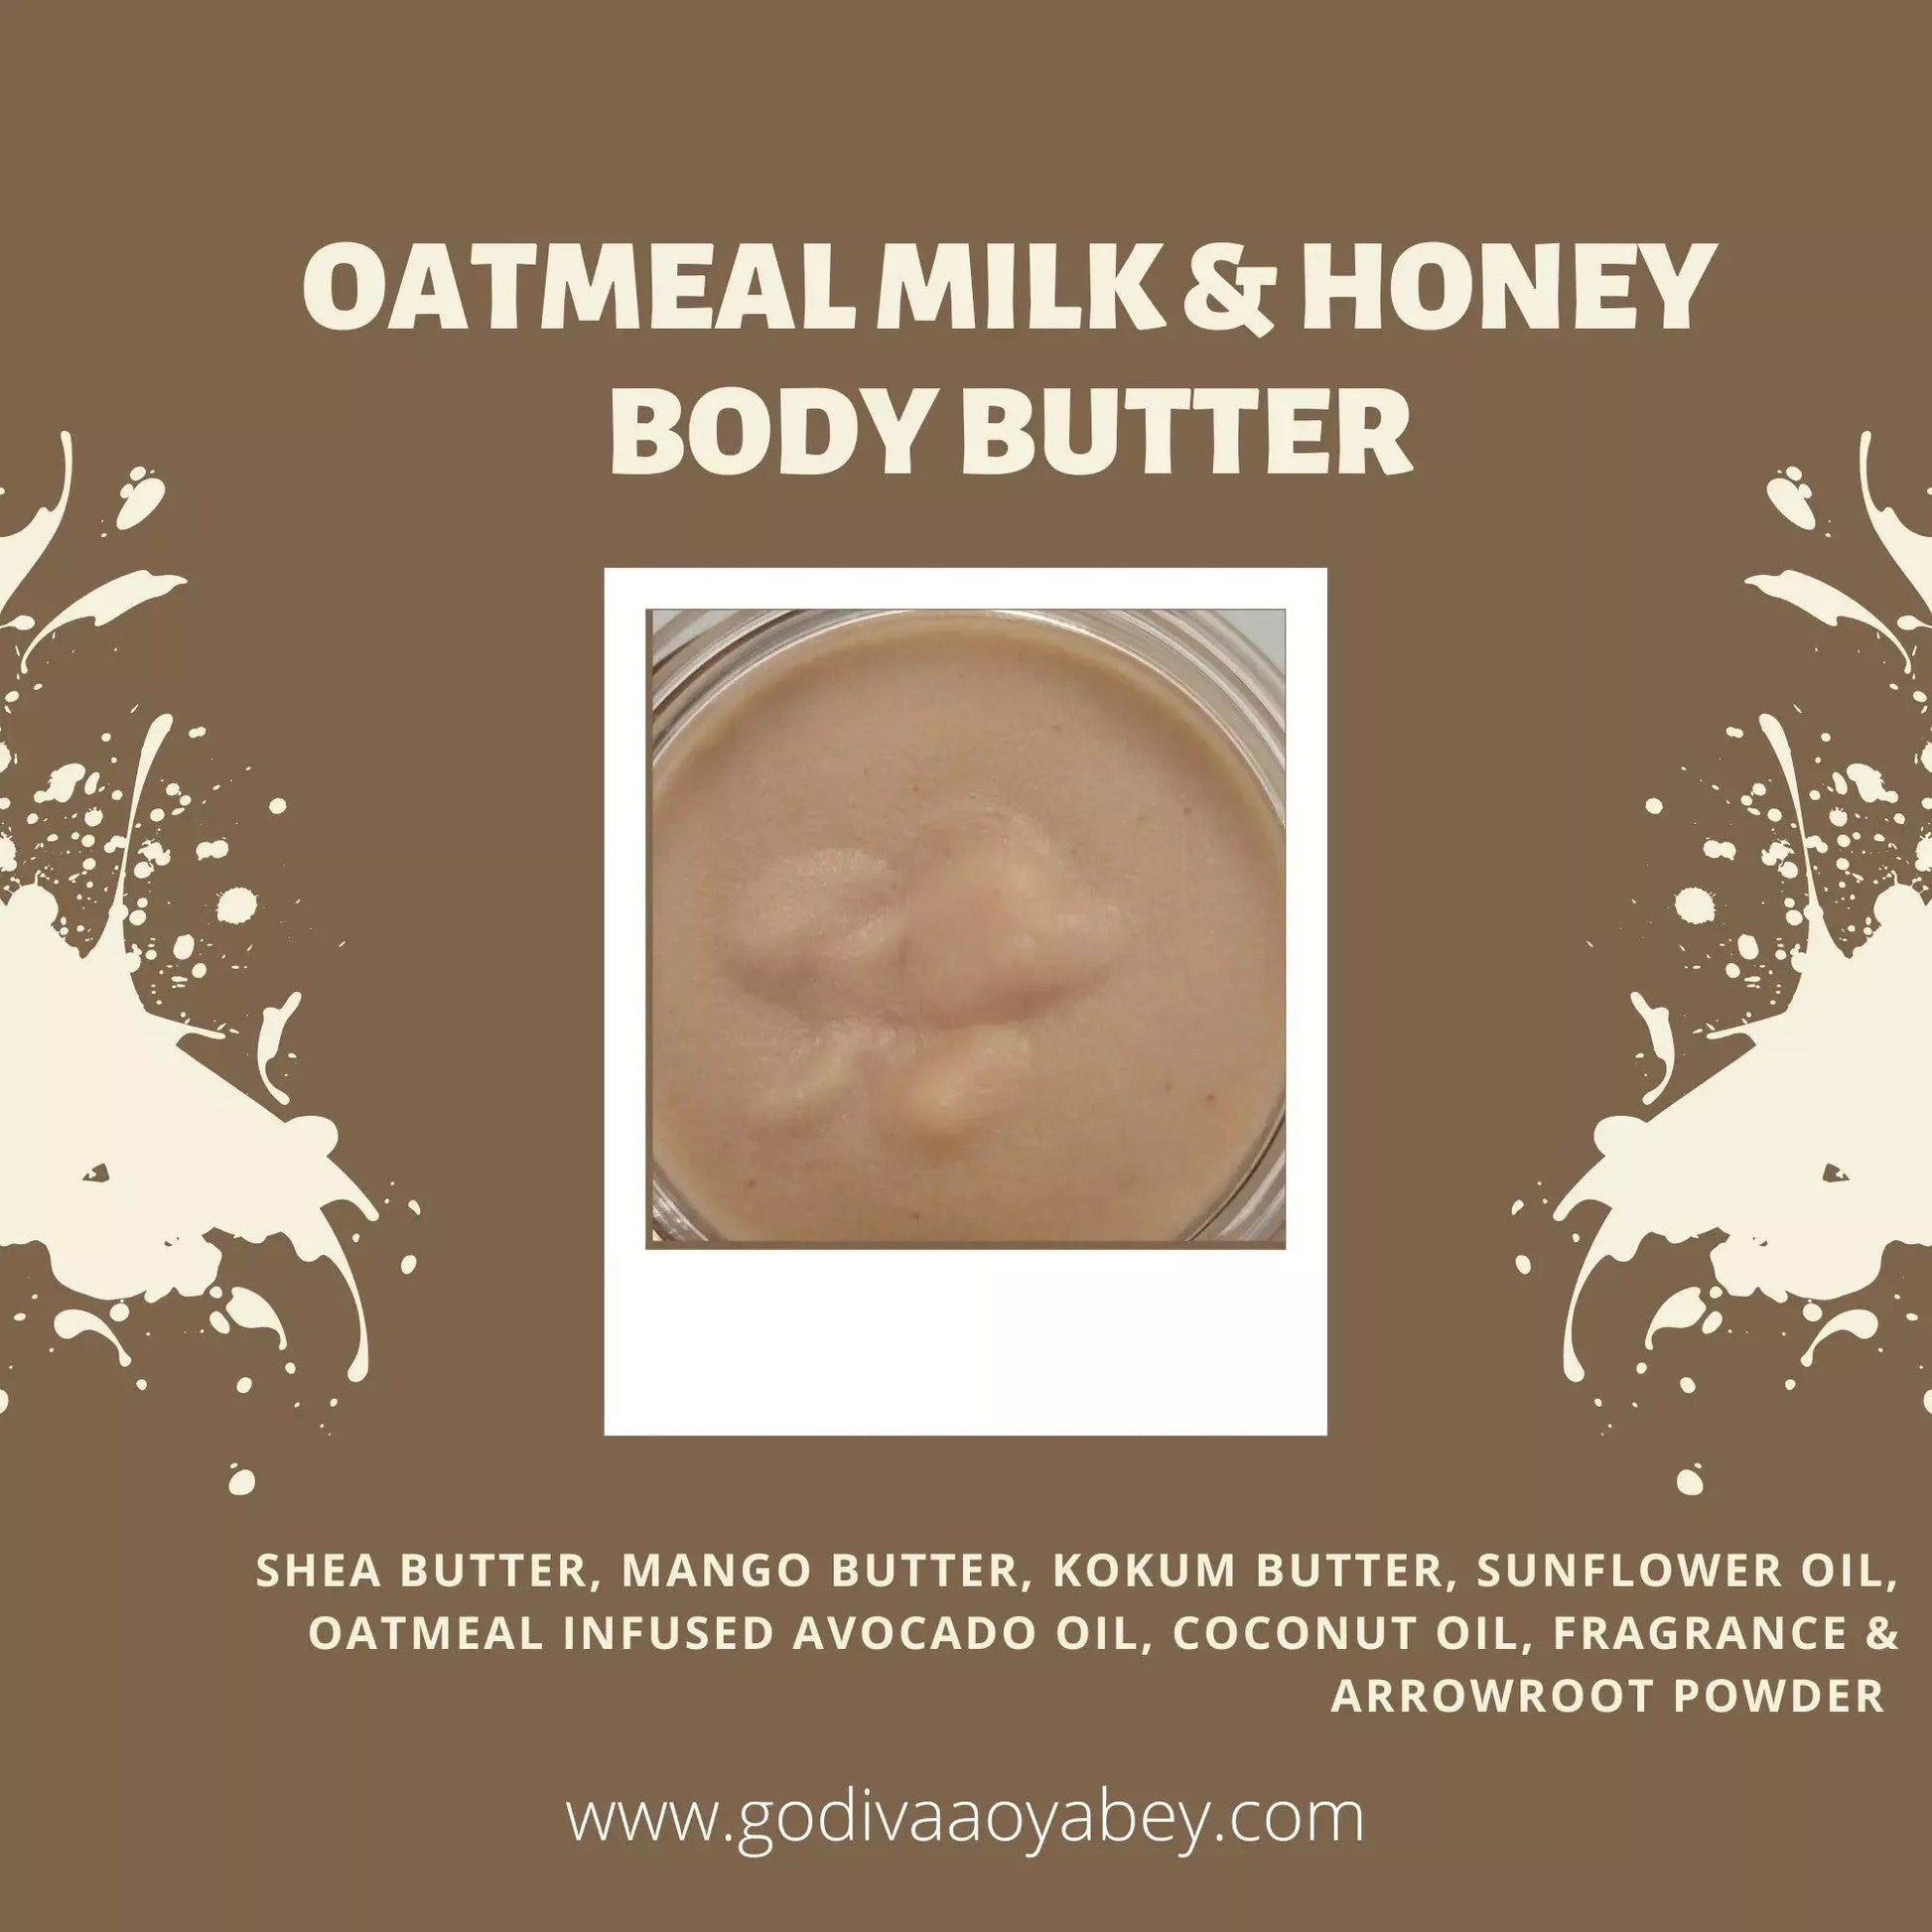 Oatmeal Milk & Honey Body Butter - Godiva Oya Bey